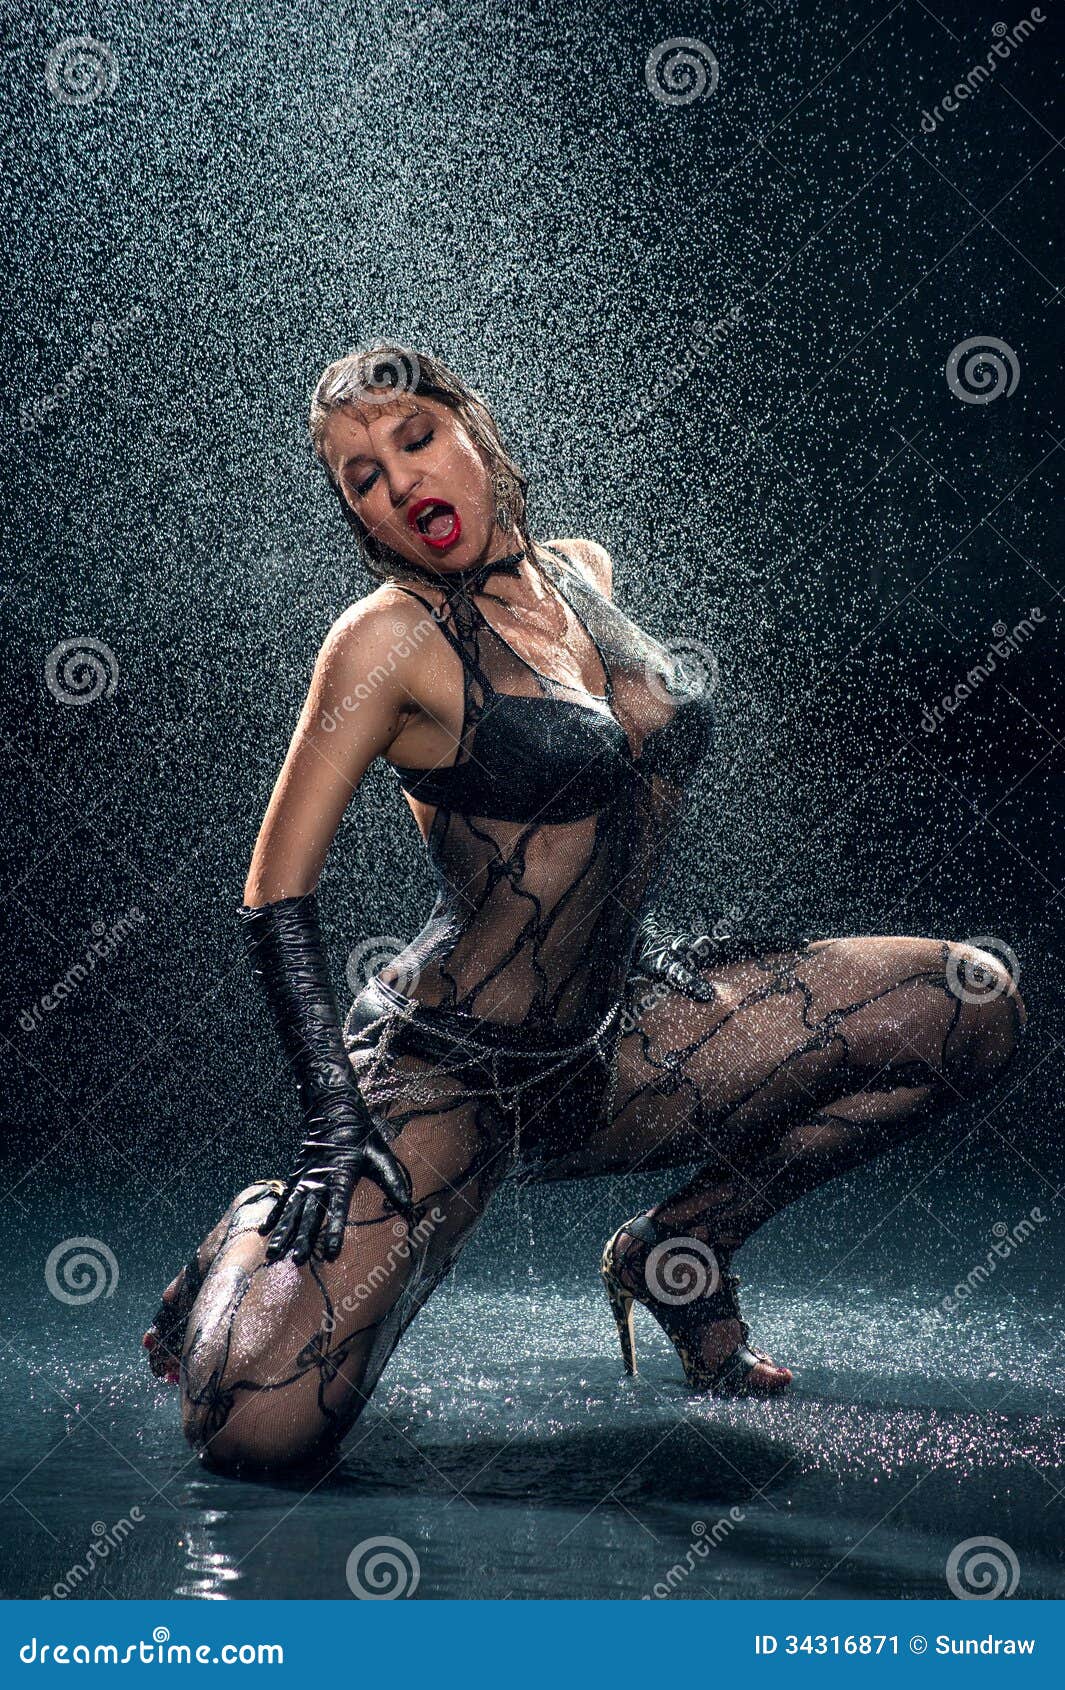 Wet Woman In Underwear Dancing Stock Image Ima